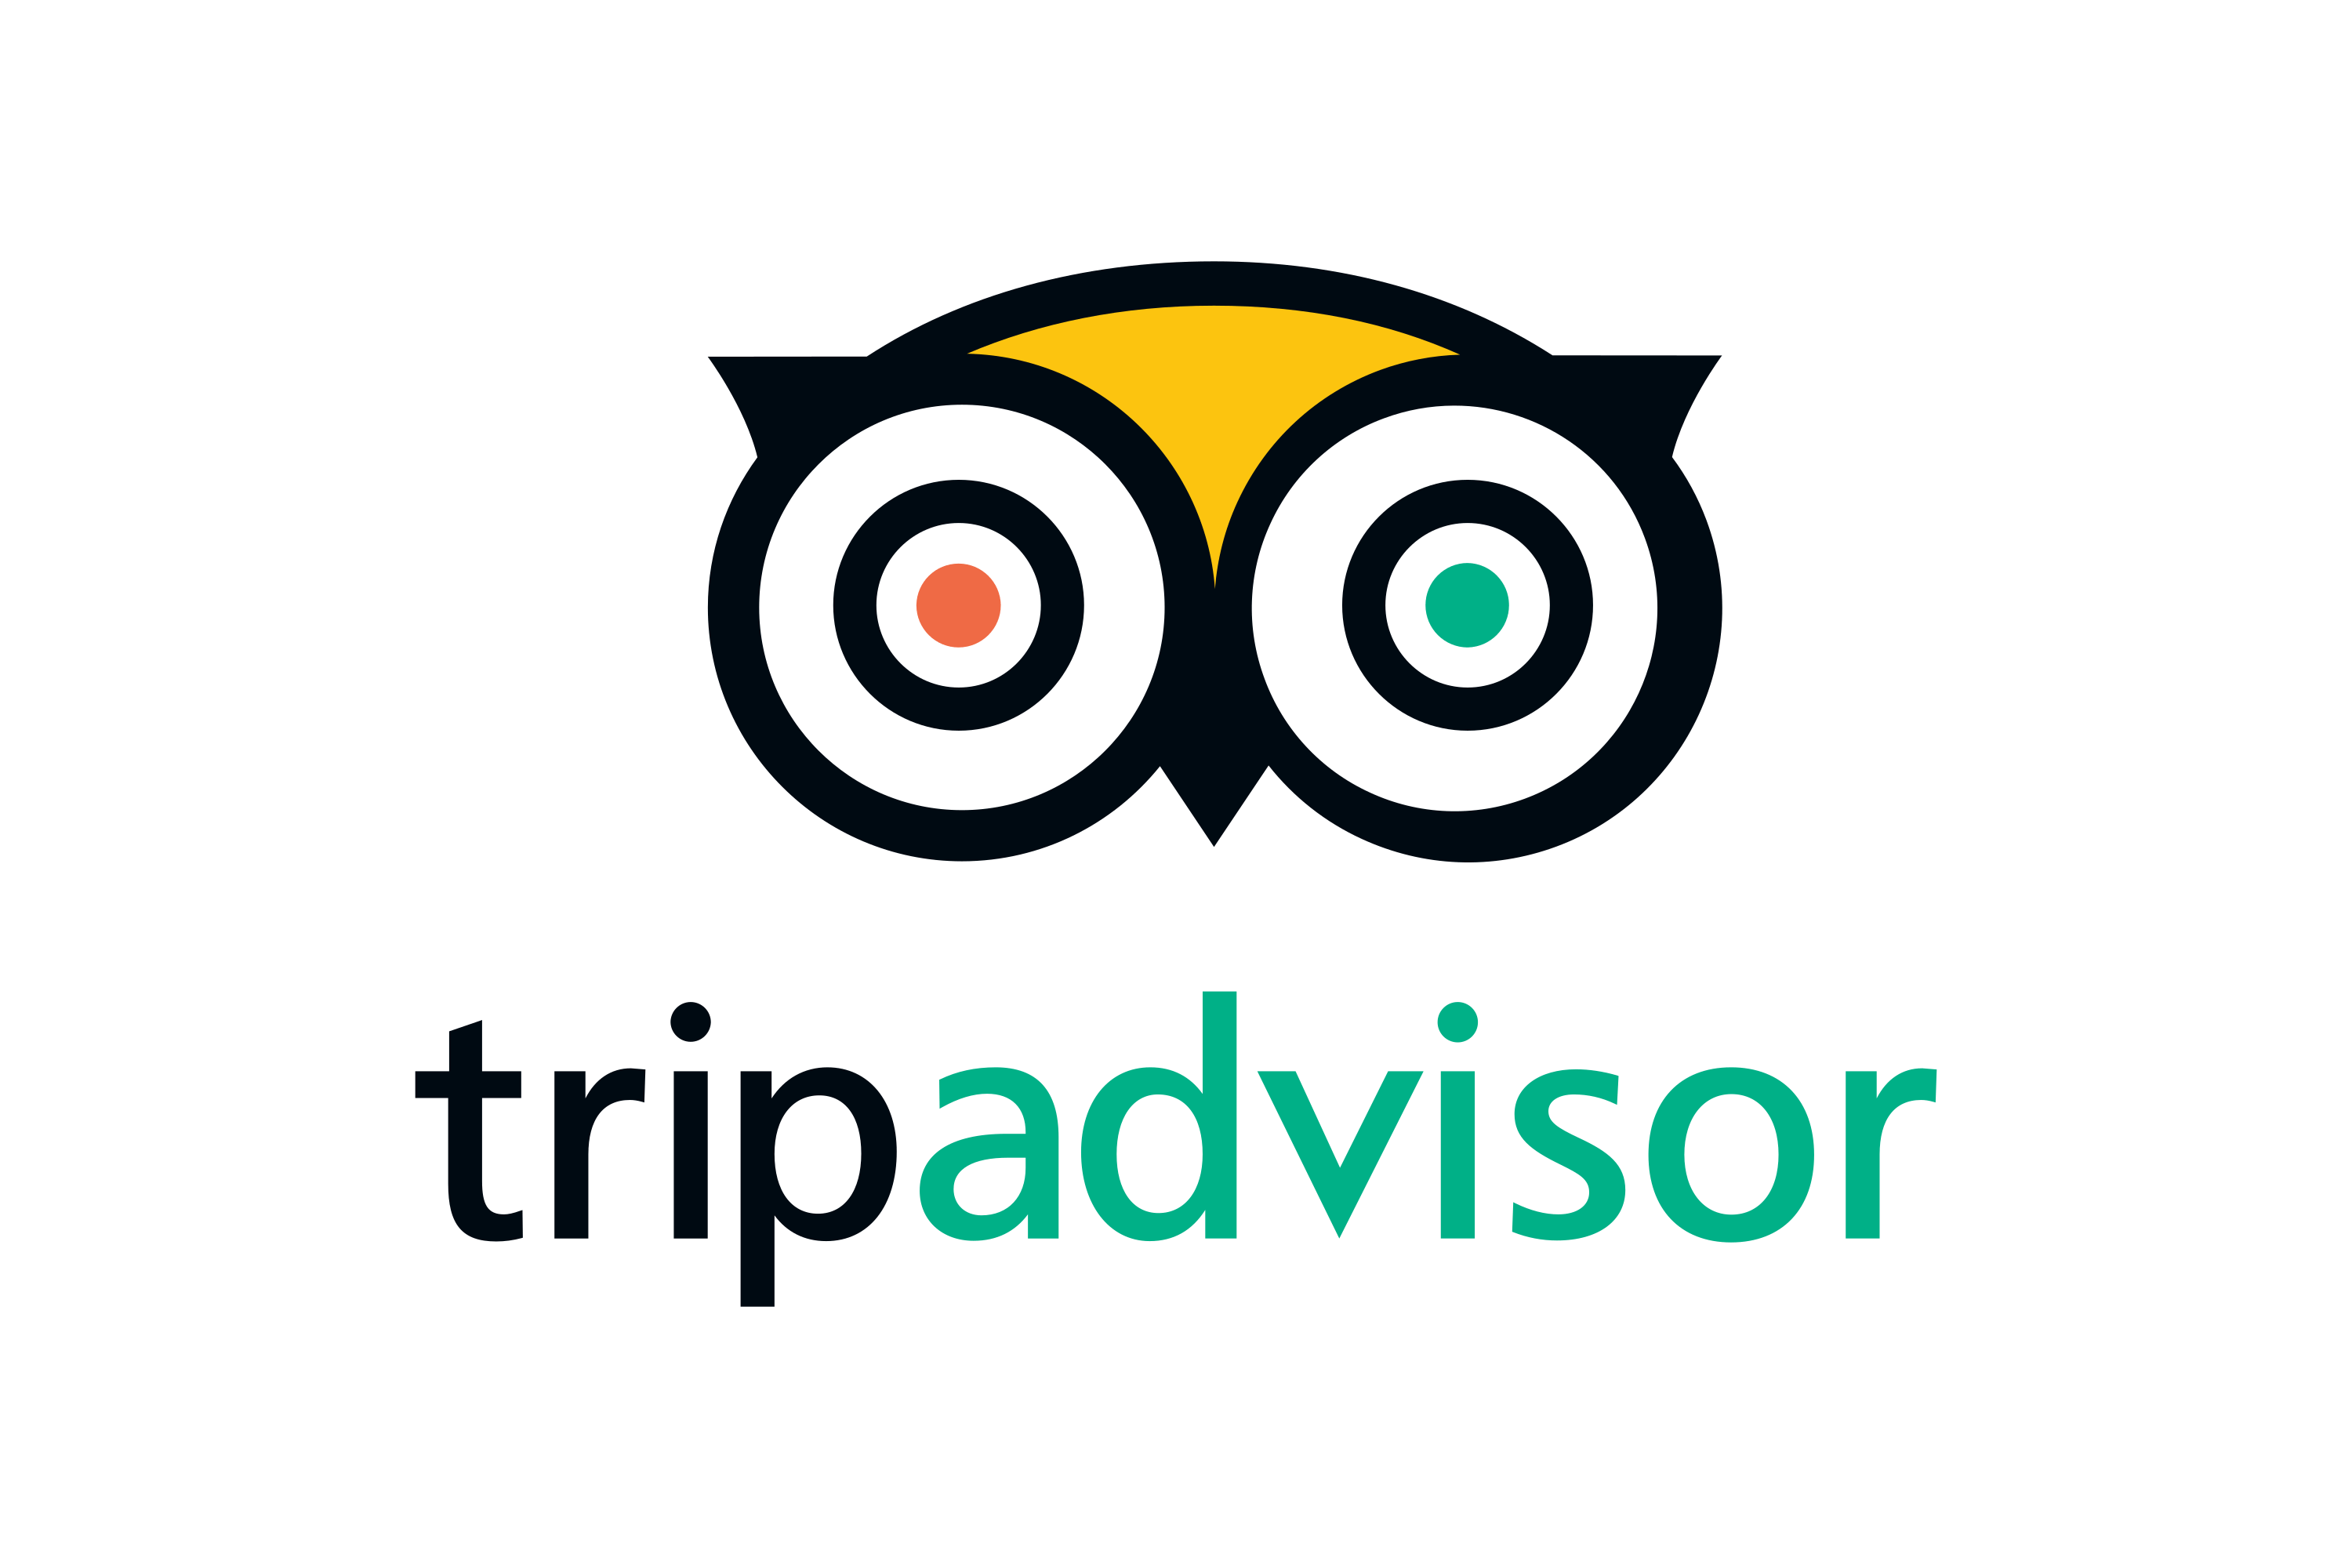 home lodge bed & breakfast ratings on tripadvisor